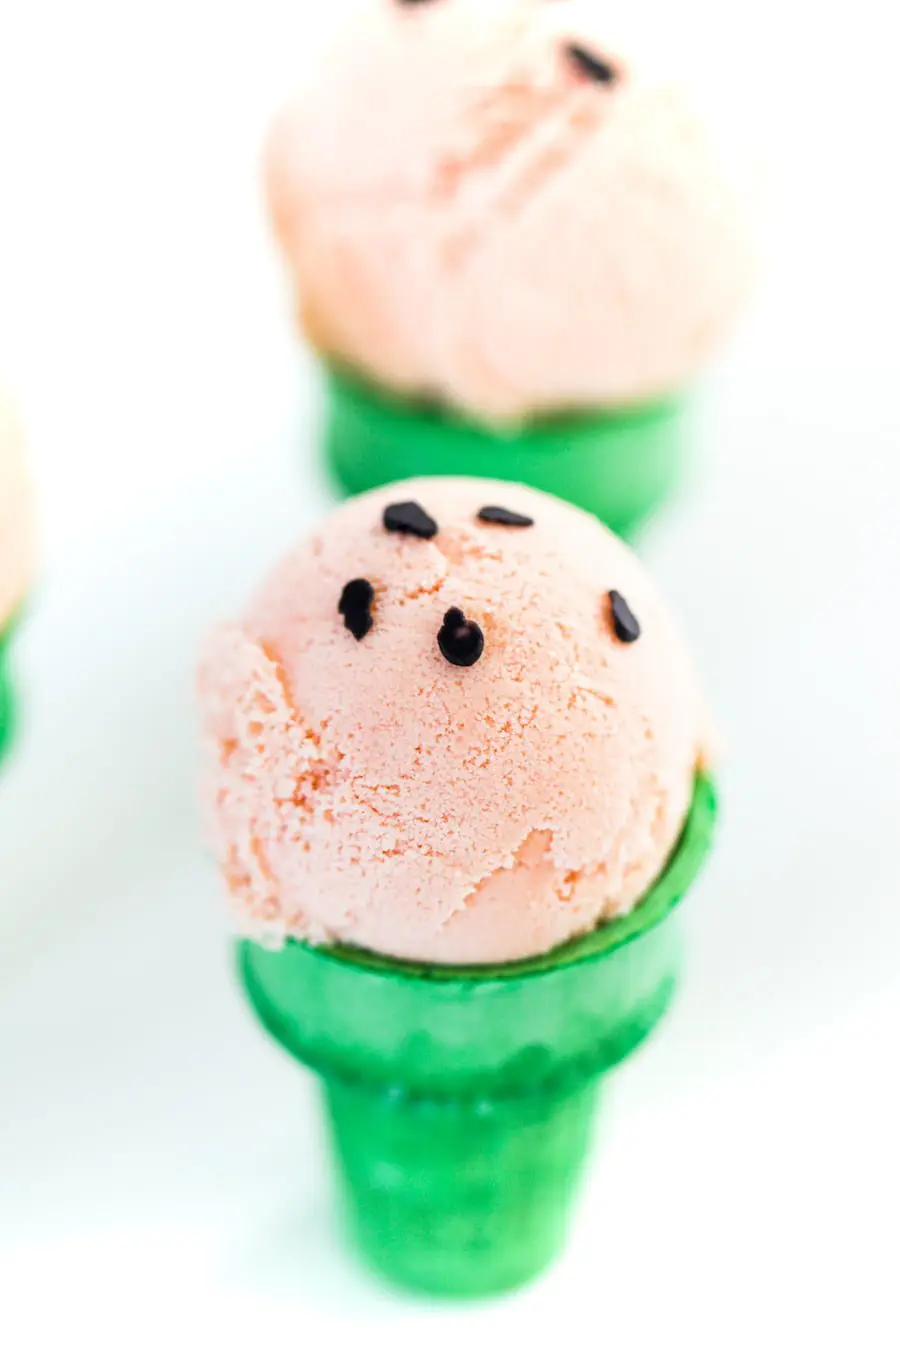 Watermelon Ice Cream with Chocolate "Seeds" in Ice Cream Cones